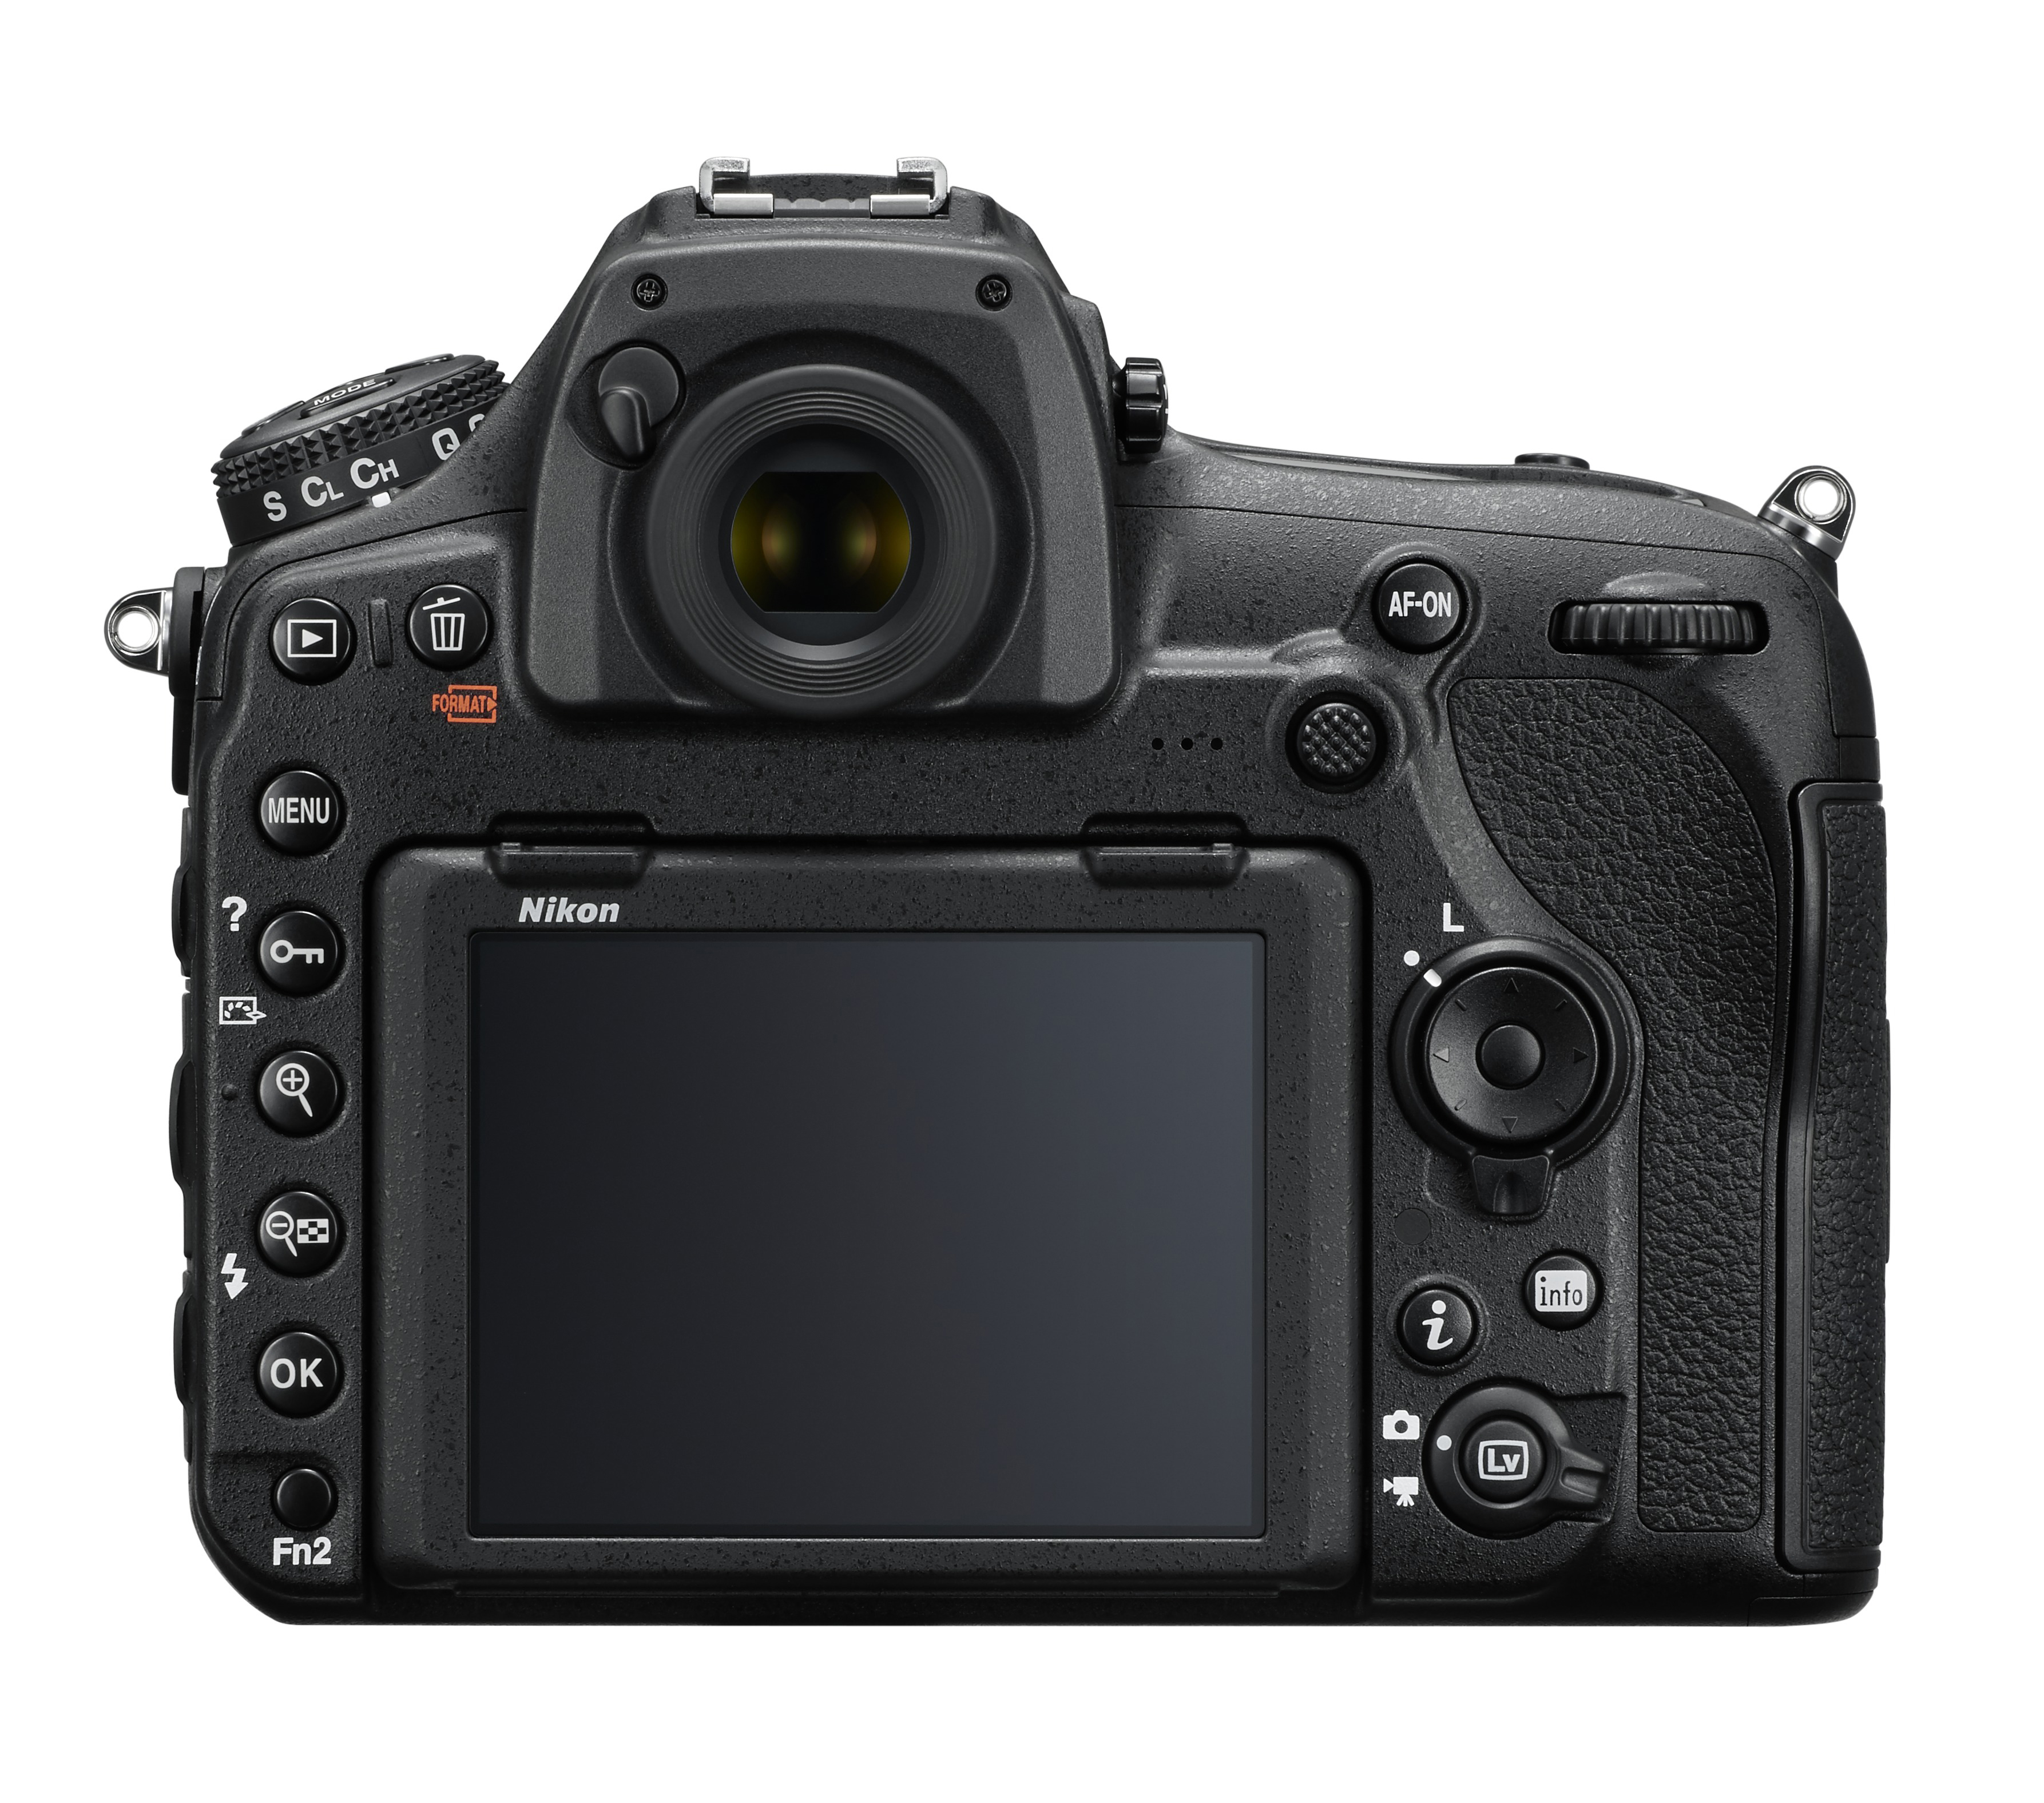 NIKON D850 Body Spiegelreflexkamera, 45,7 Display, WLAN, Megapixel, Touchscreen Schwarz